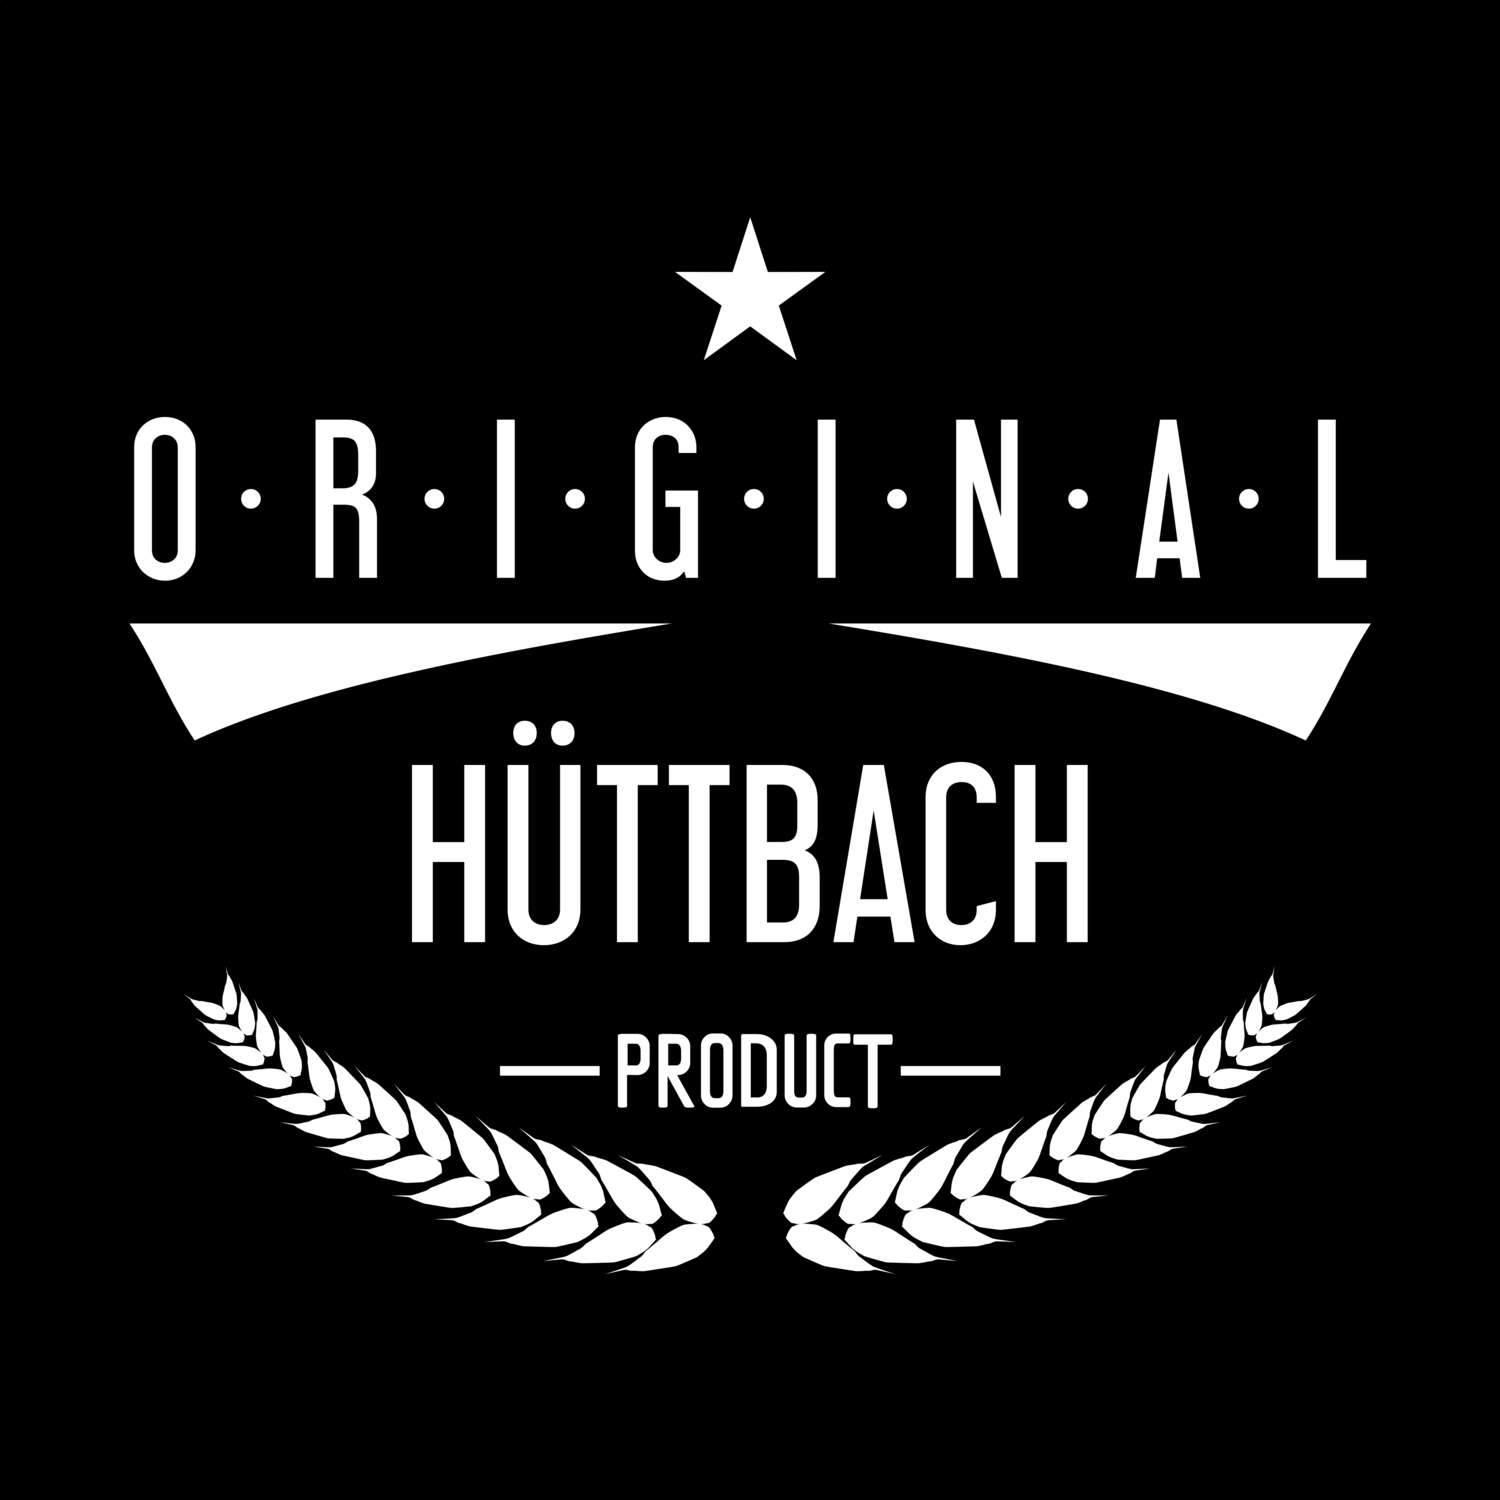 Hüttbach T-Shirt »Original Product«